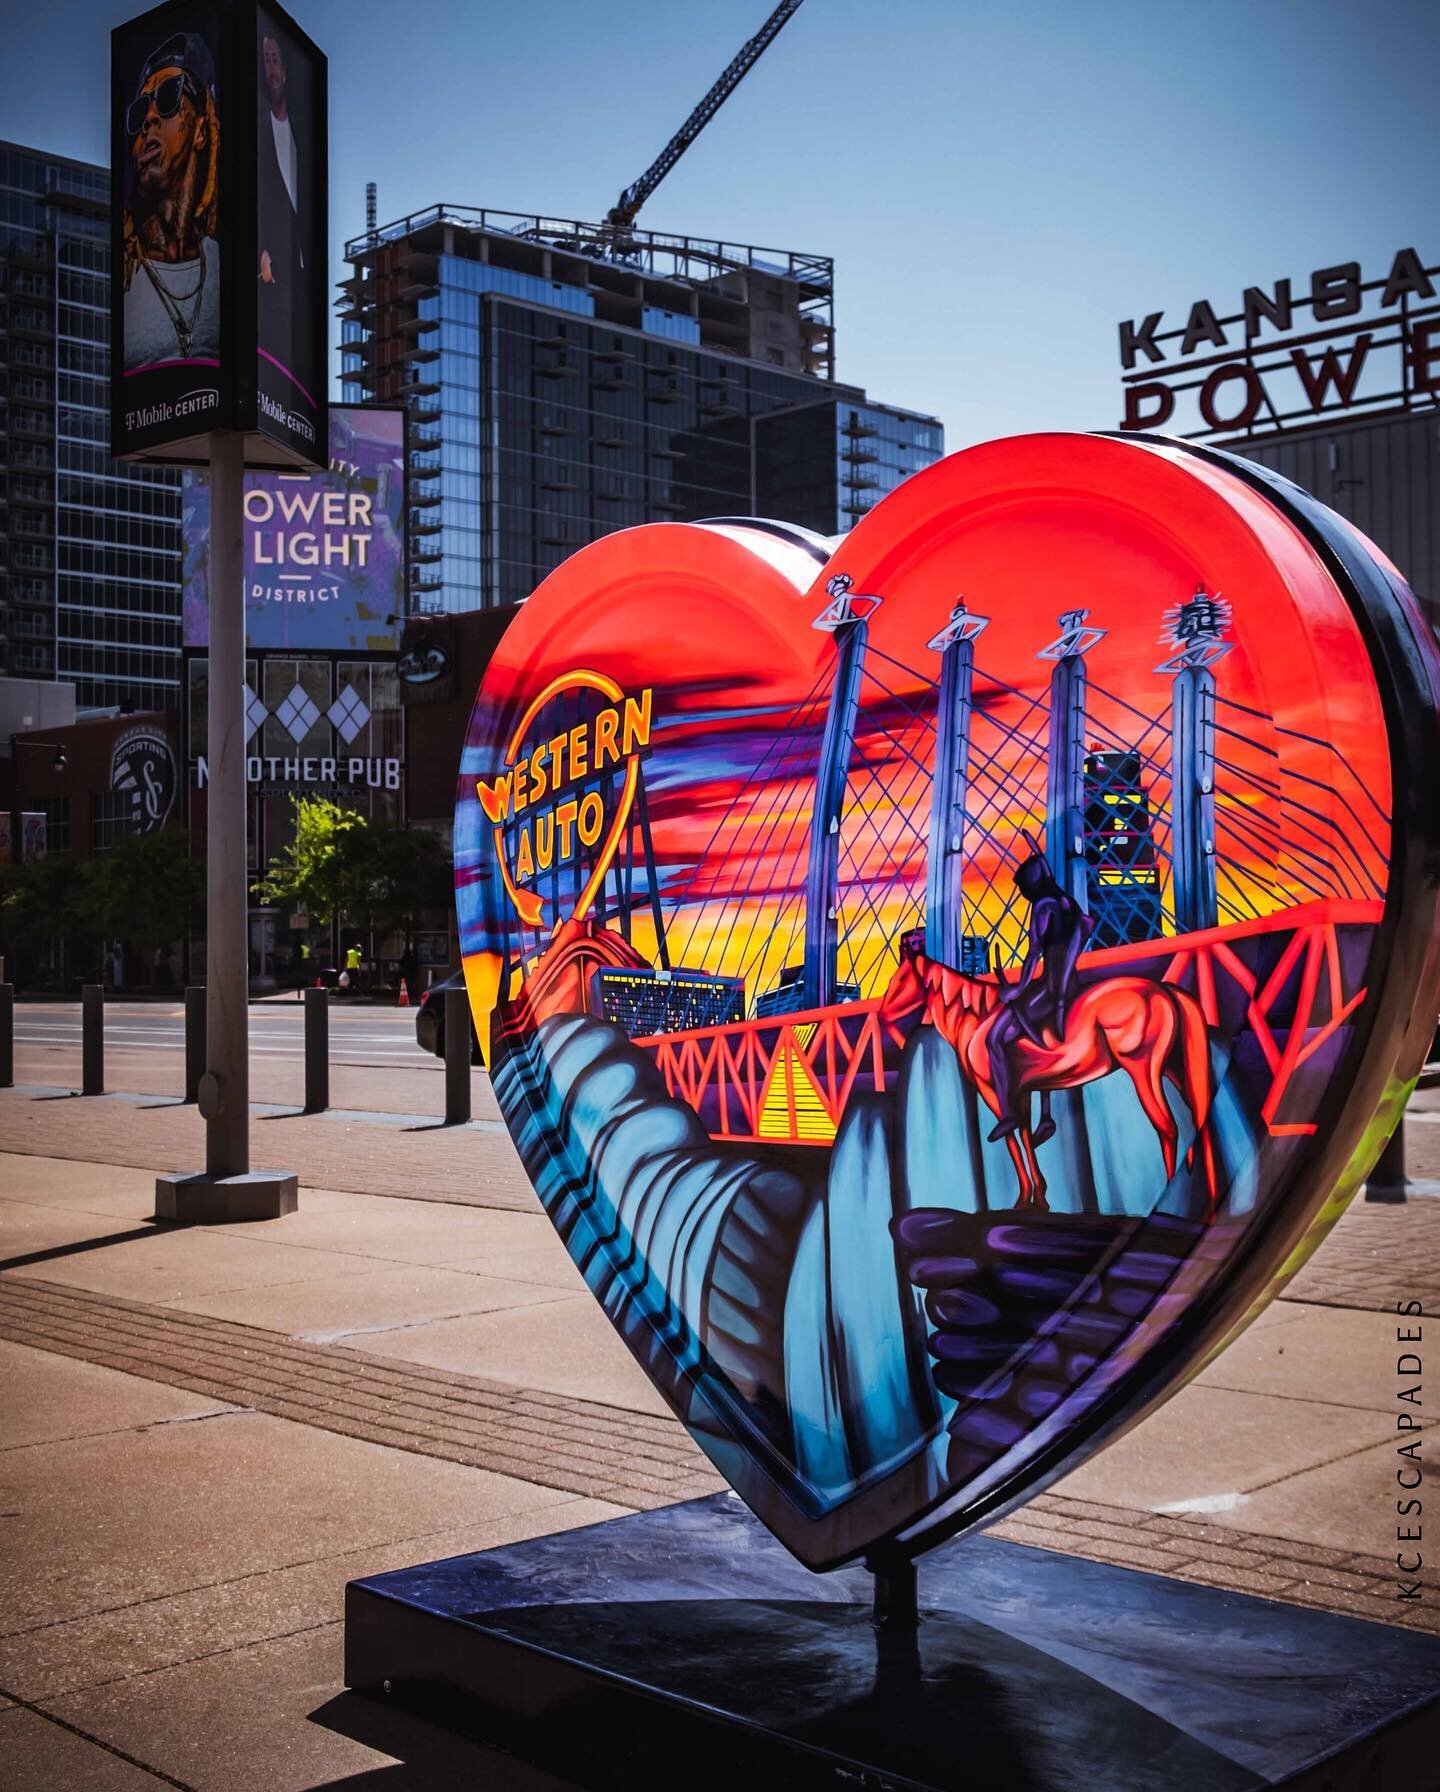 Favorite Heart so far 
.
.
.
.
#kansascity #kcmo #kcheart #paradeofheartskc #missouri #powerandlightdistrict #city #lovecity #lovekc #kclove